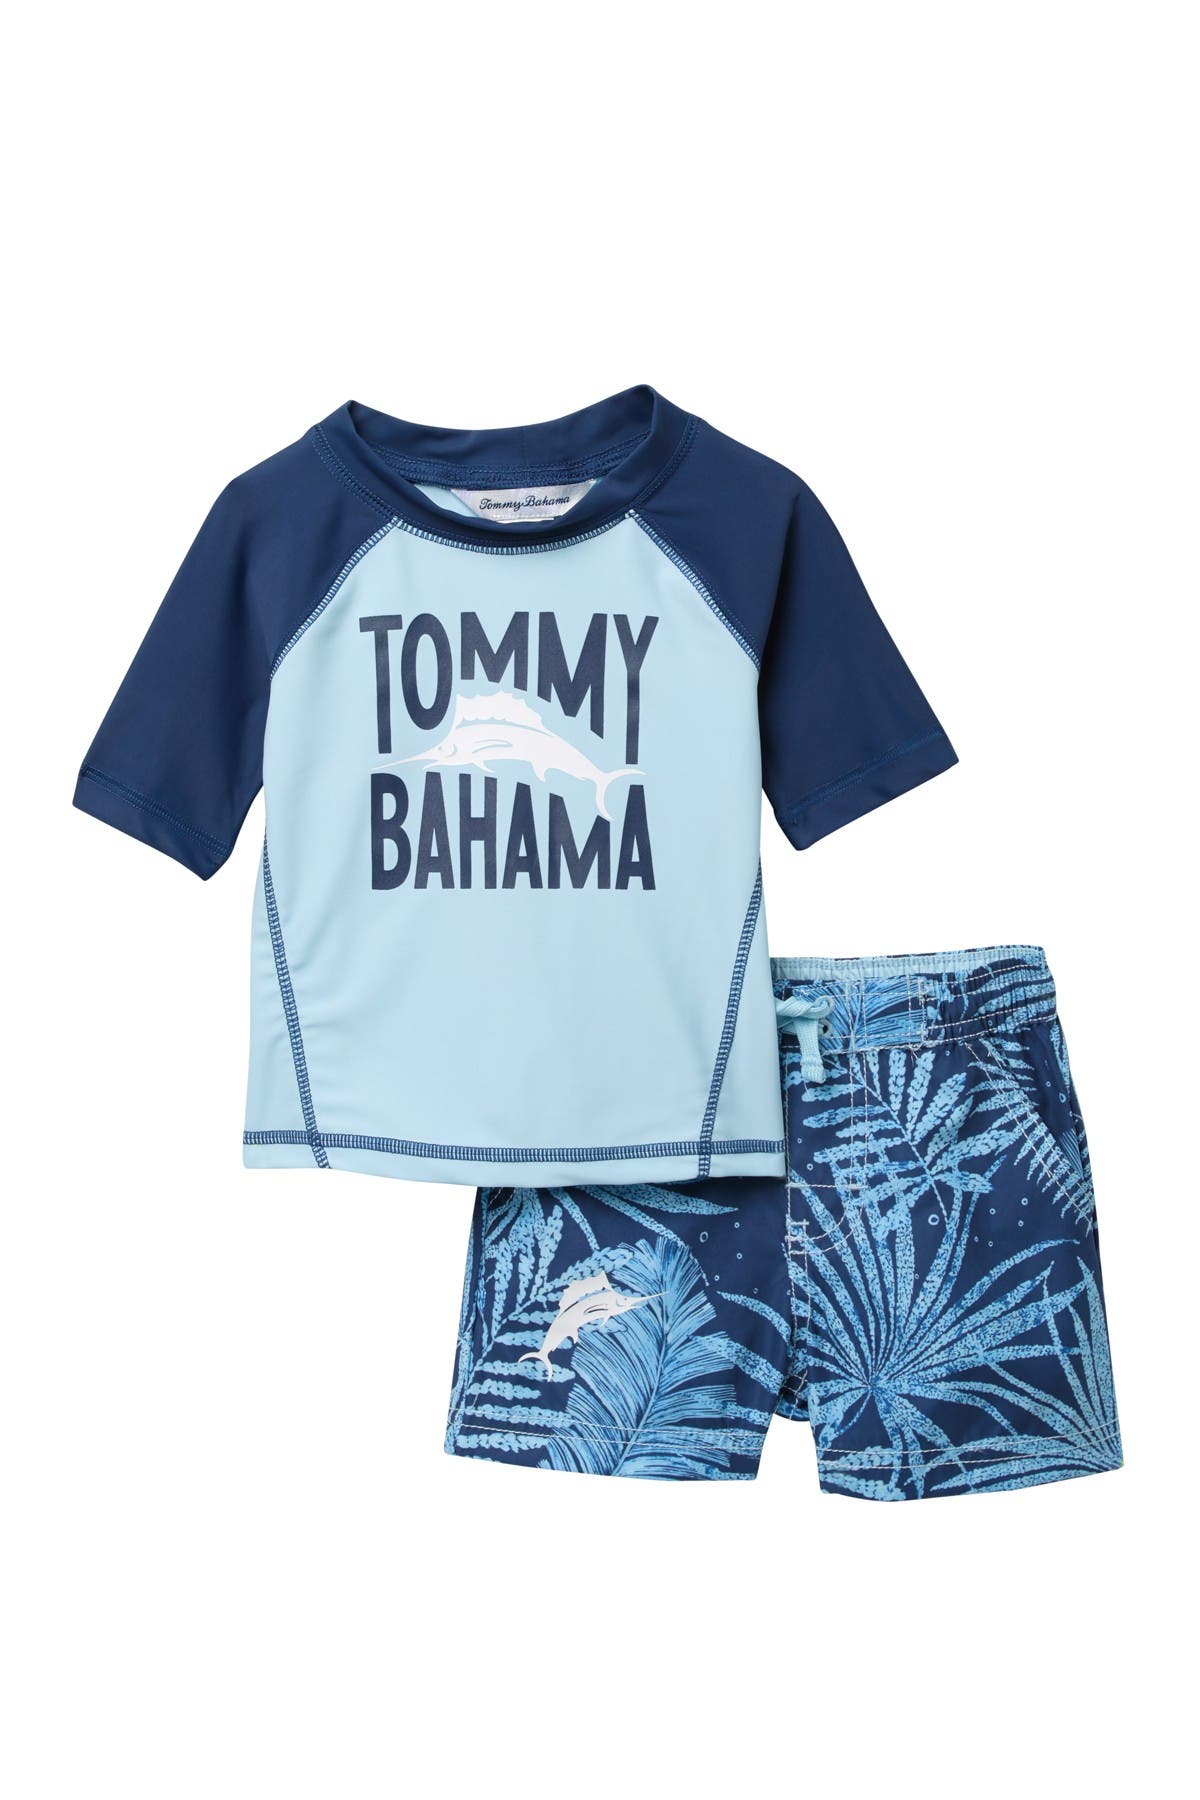 tommy bahama kidswear